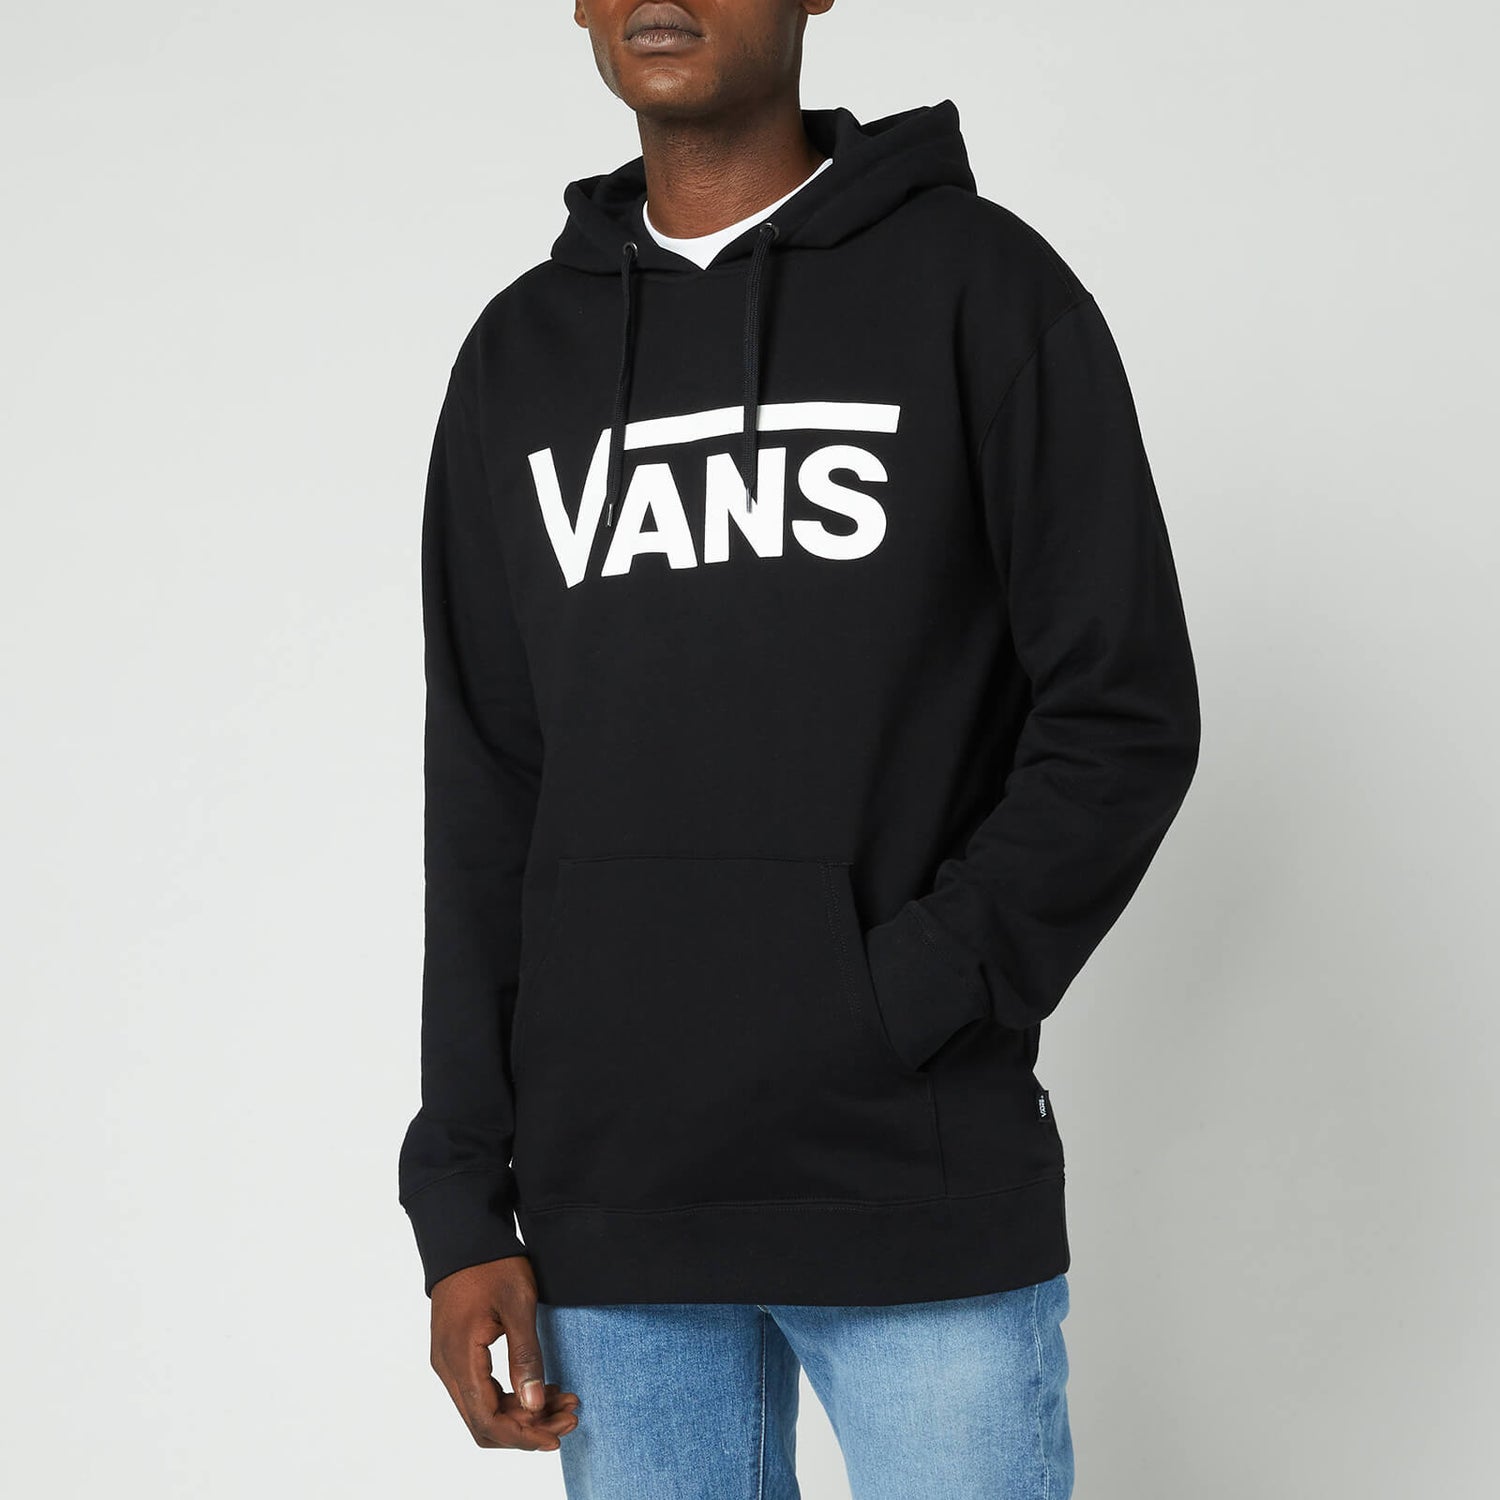 Vans Men's Classic Pullover Hoodie - Black/White - S